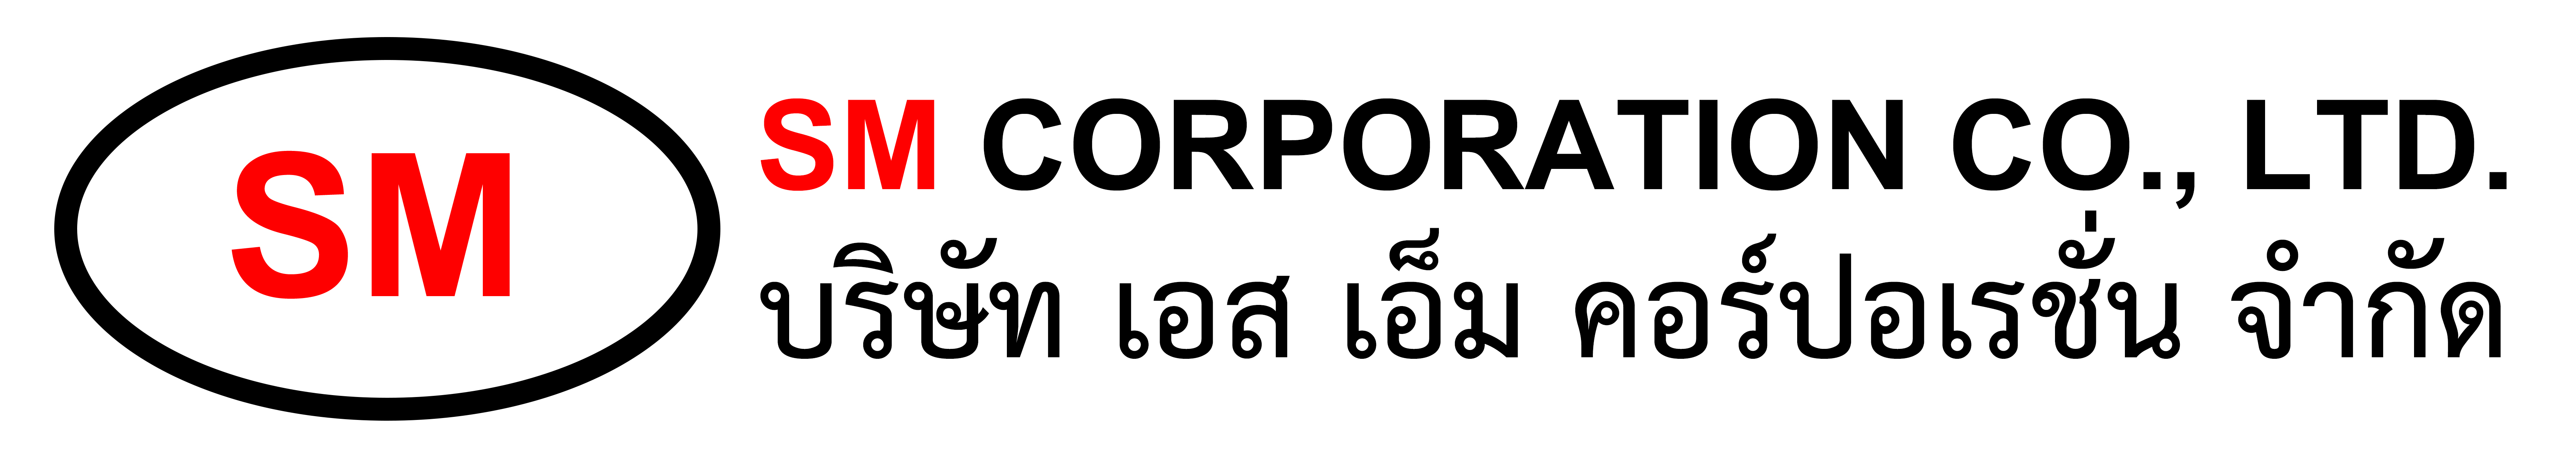 SM CORPORATION CO.,LTD., บริษัท เอส เอ็ม คอร์ปอเรชั่น จำกัด